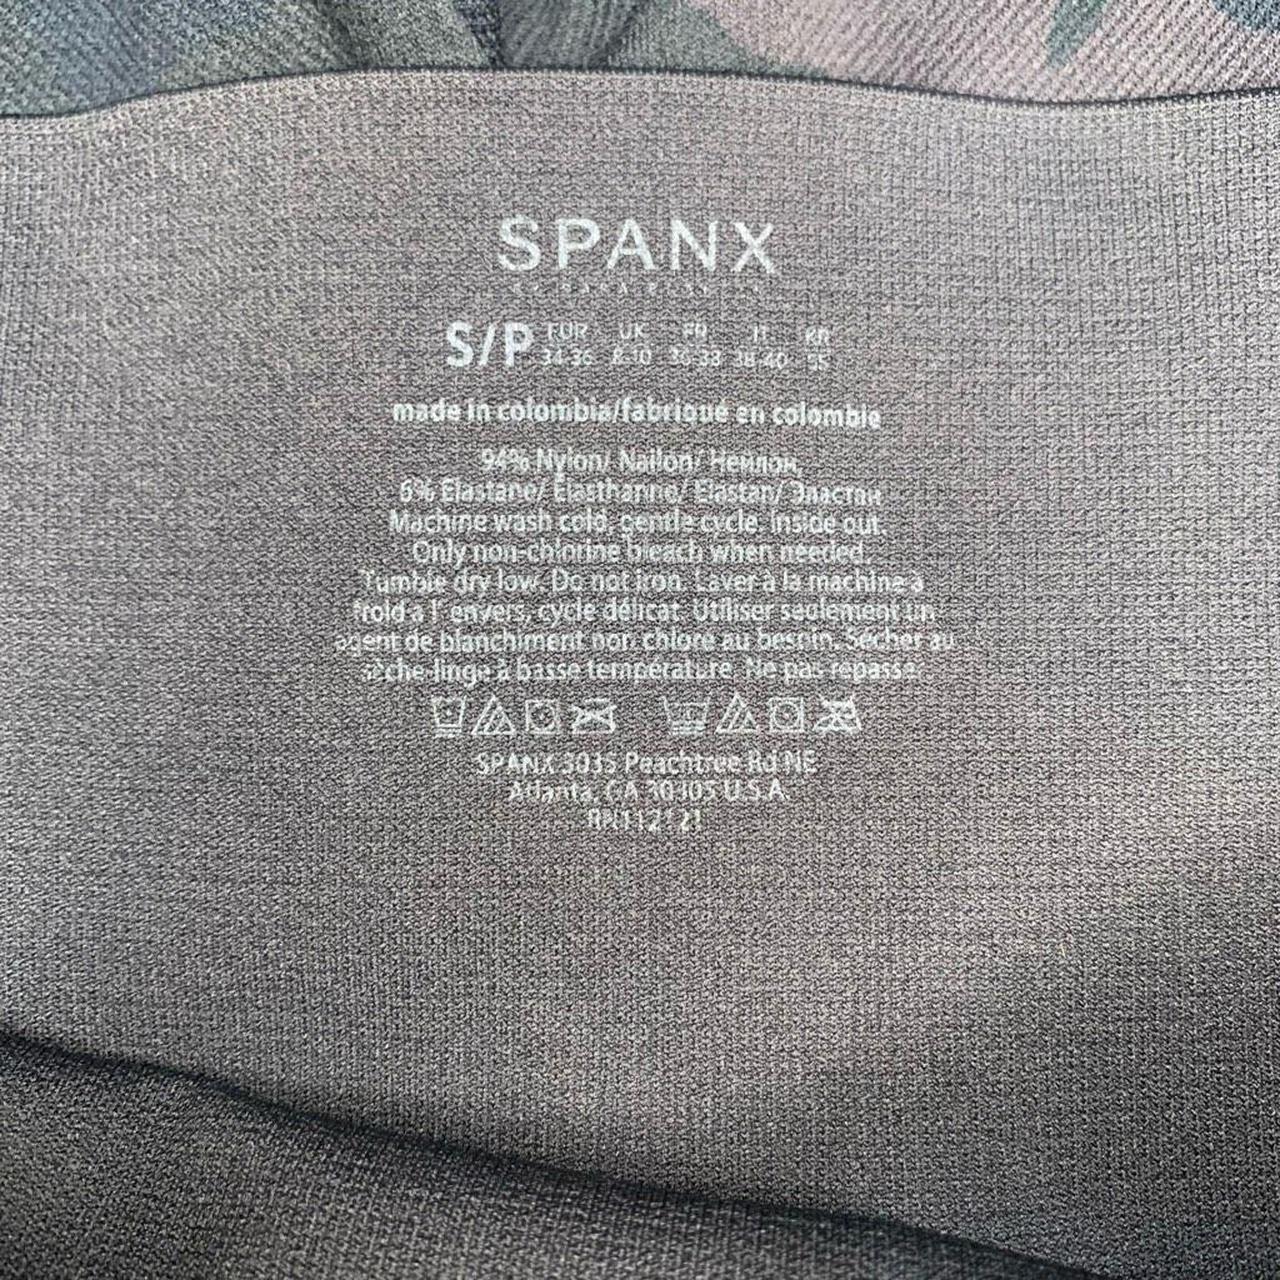 This pair of leggings are by Spanx by Sara Blakely - Depop